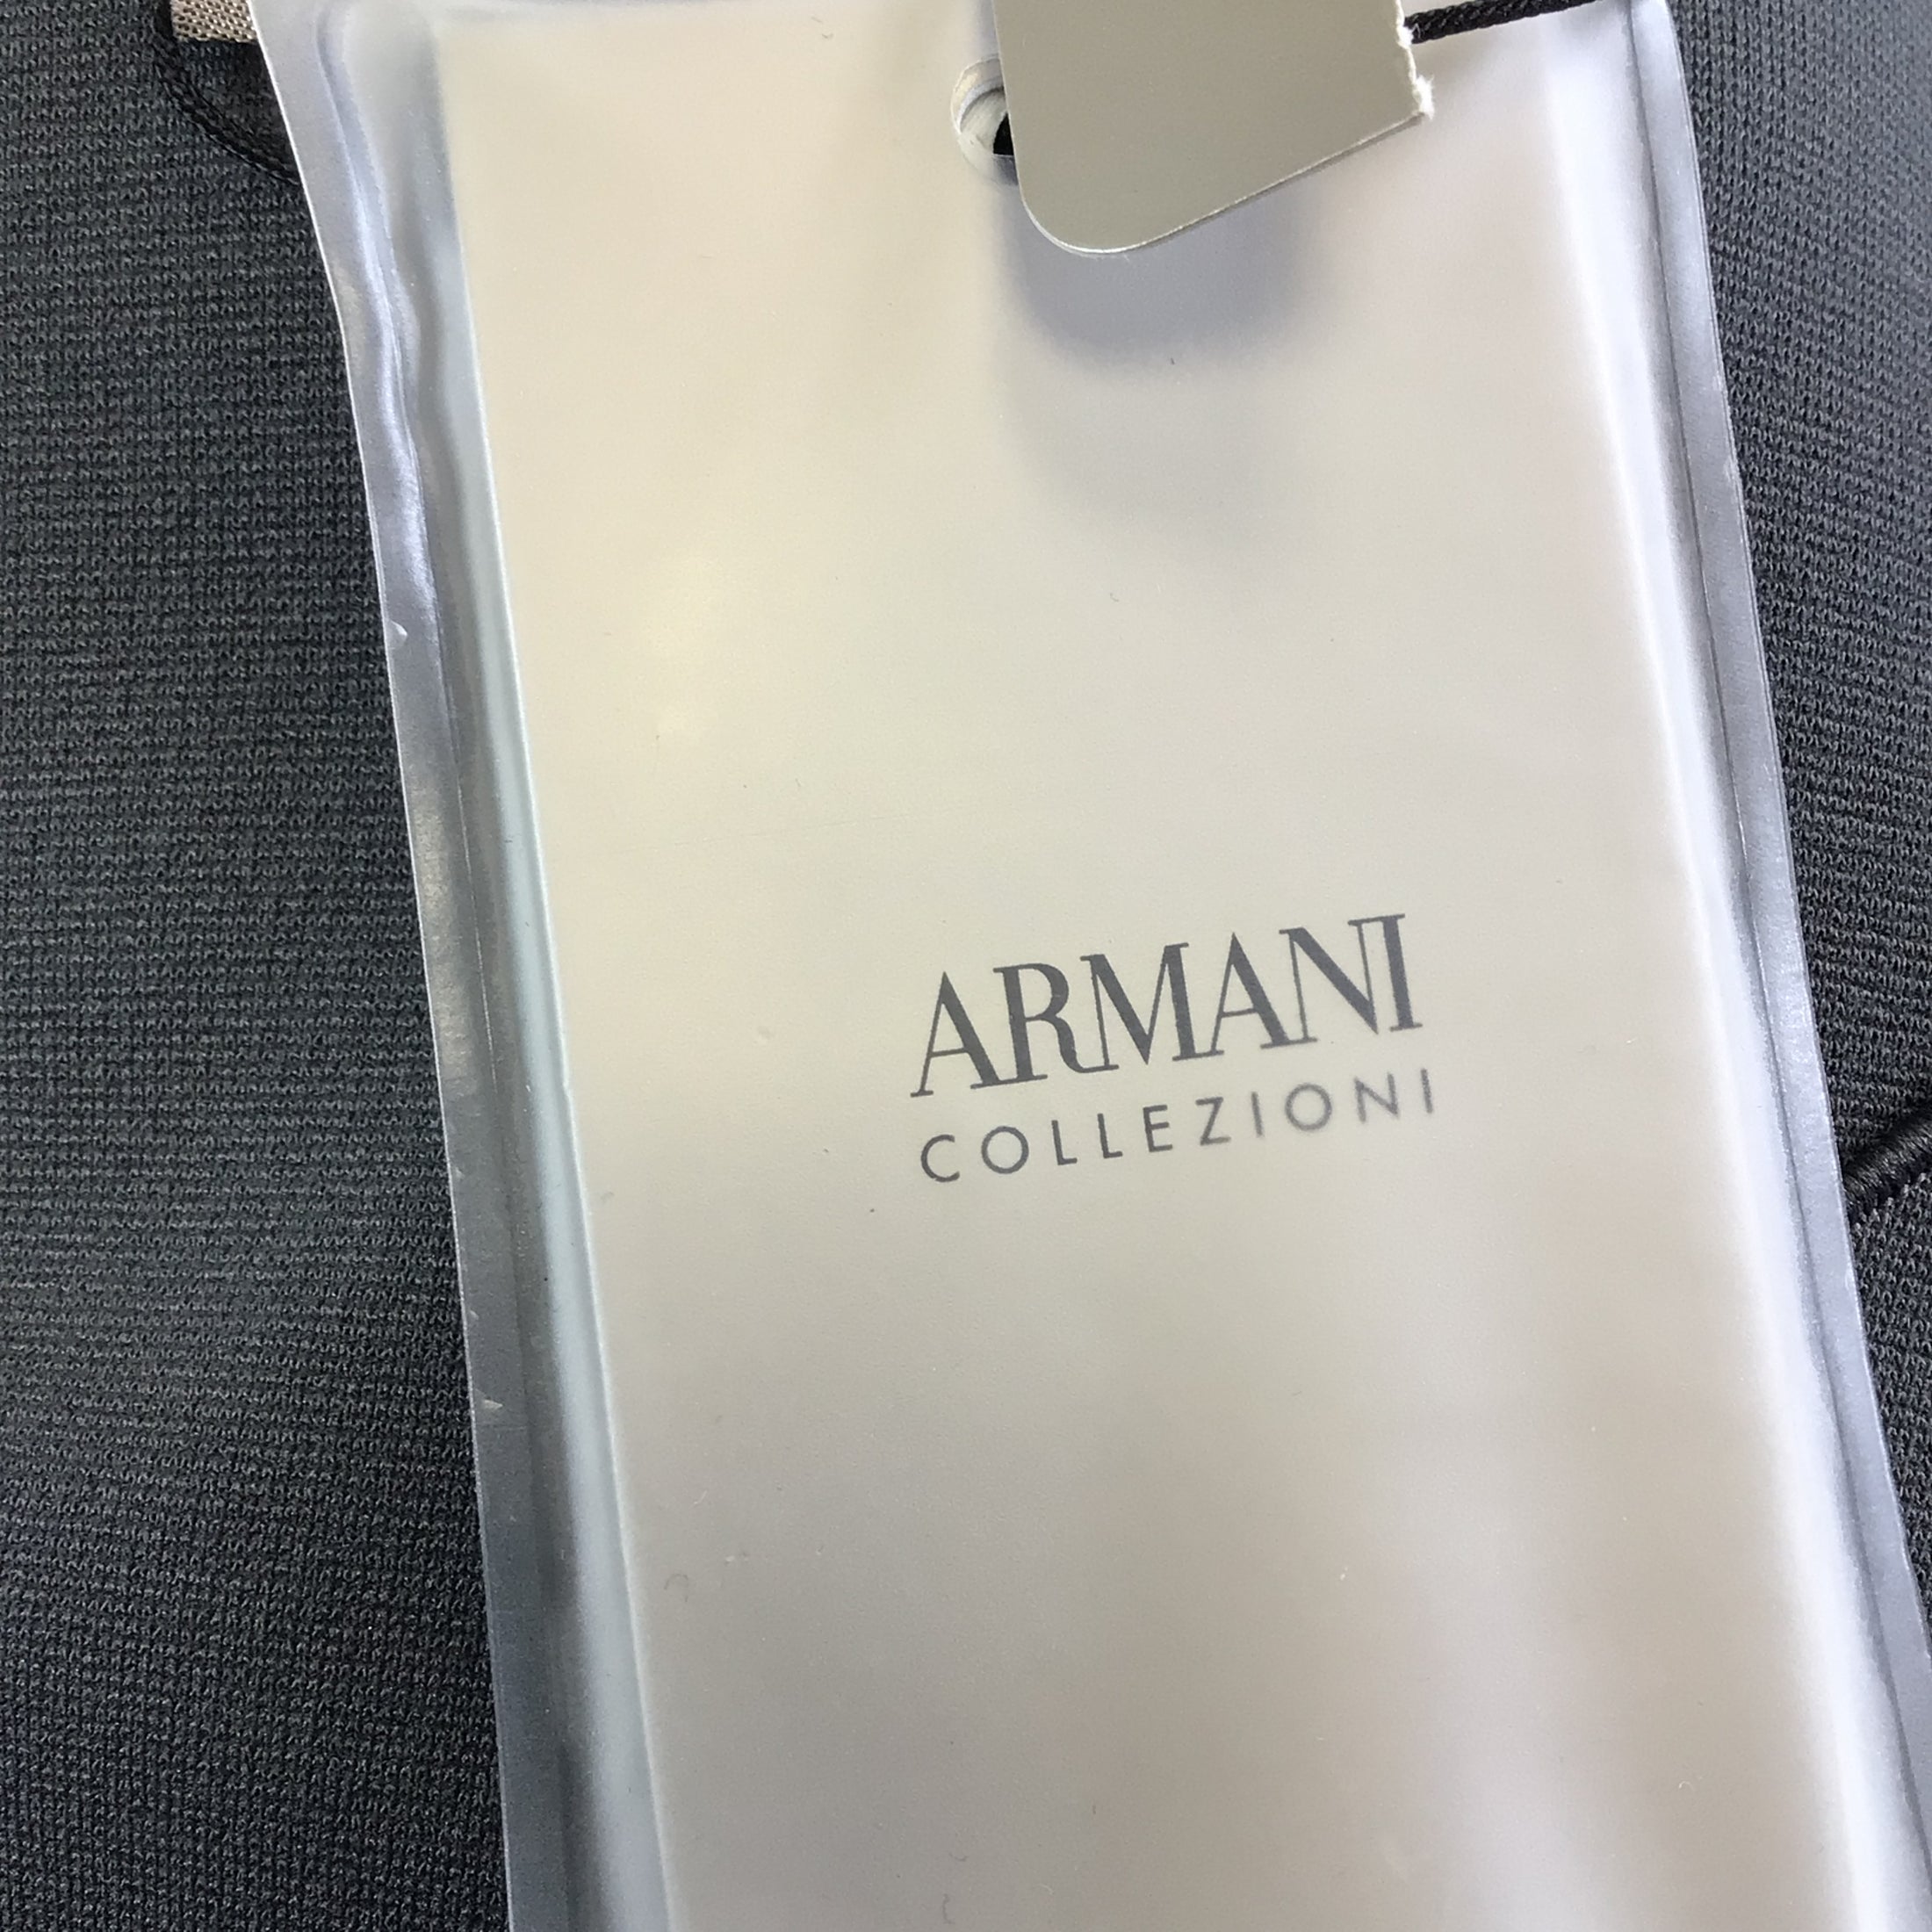 Armani Collezioni Charcoal Grey Short Sleeved V-Neck Stretch Knit Midi Dress